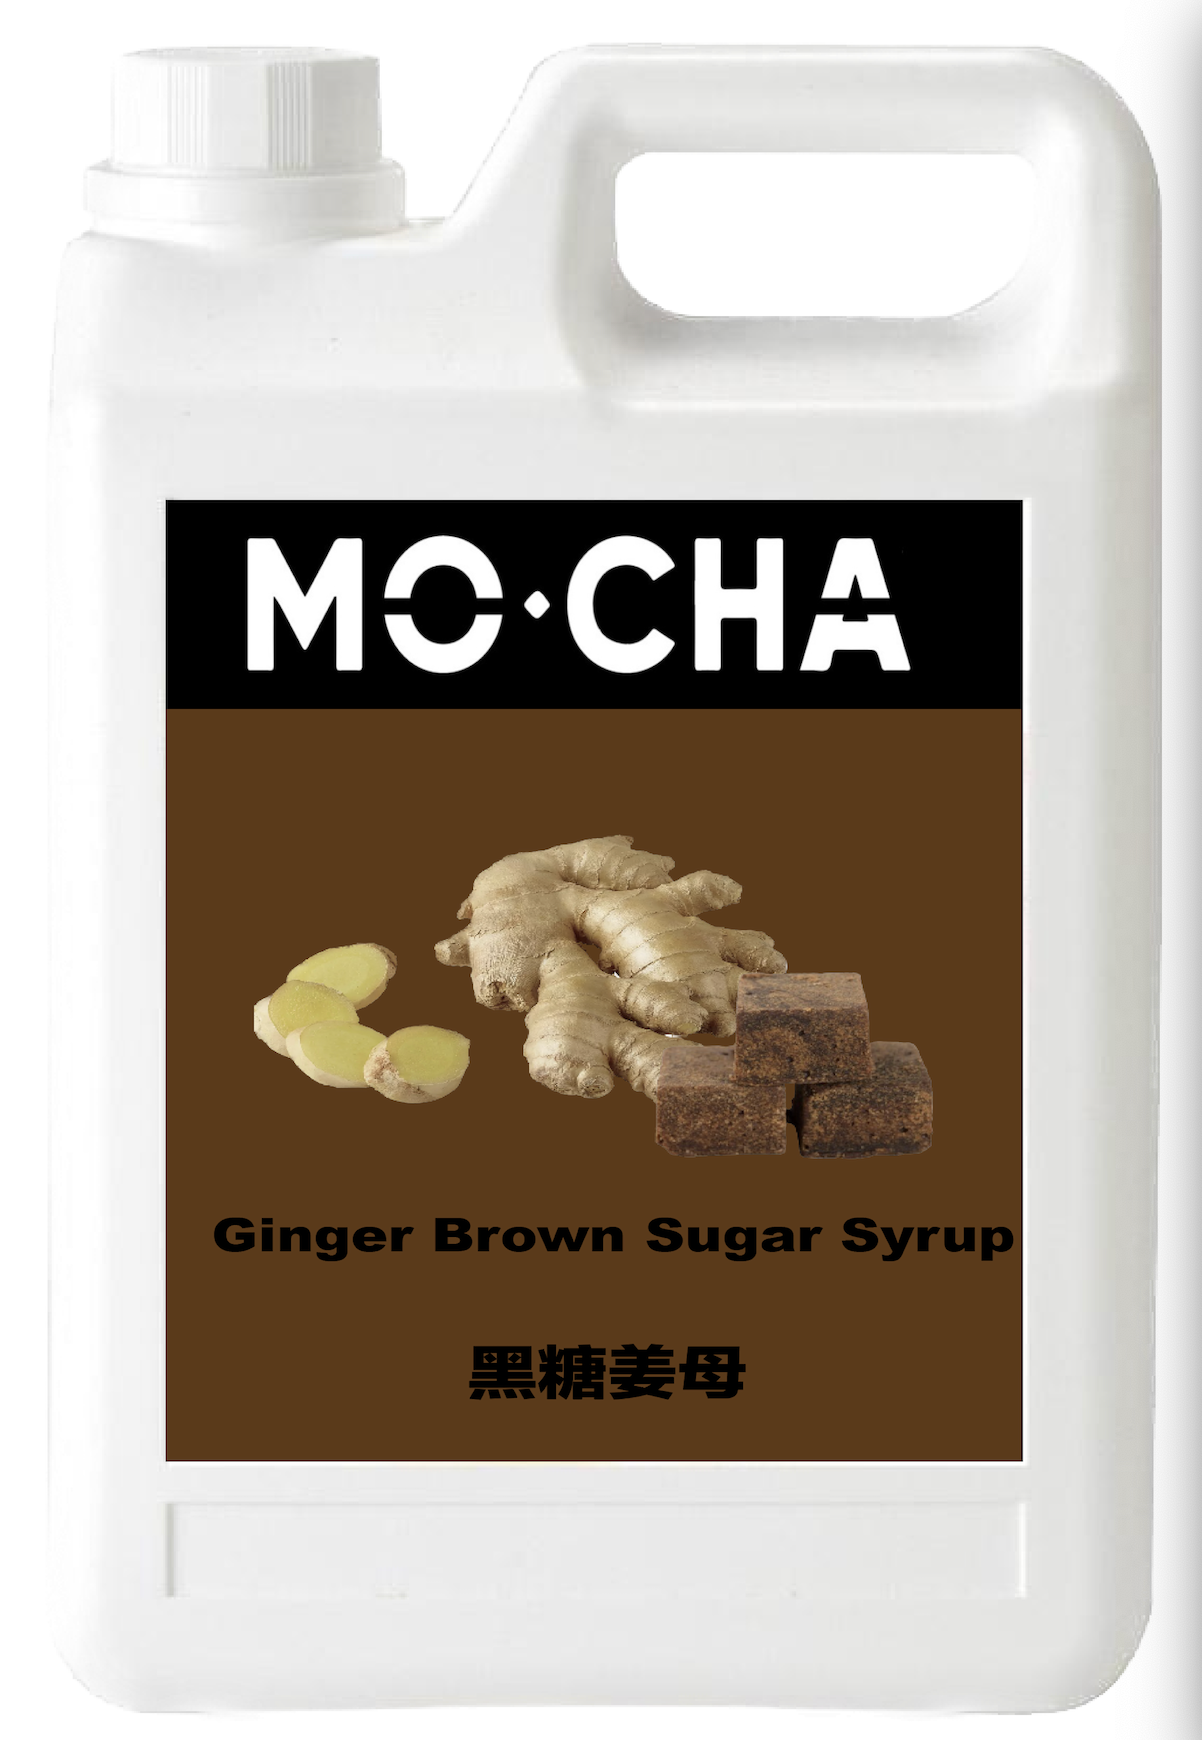 Ginger Brown Sugar Syrup